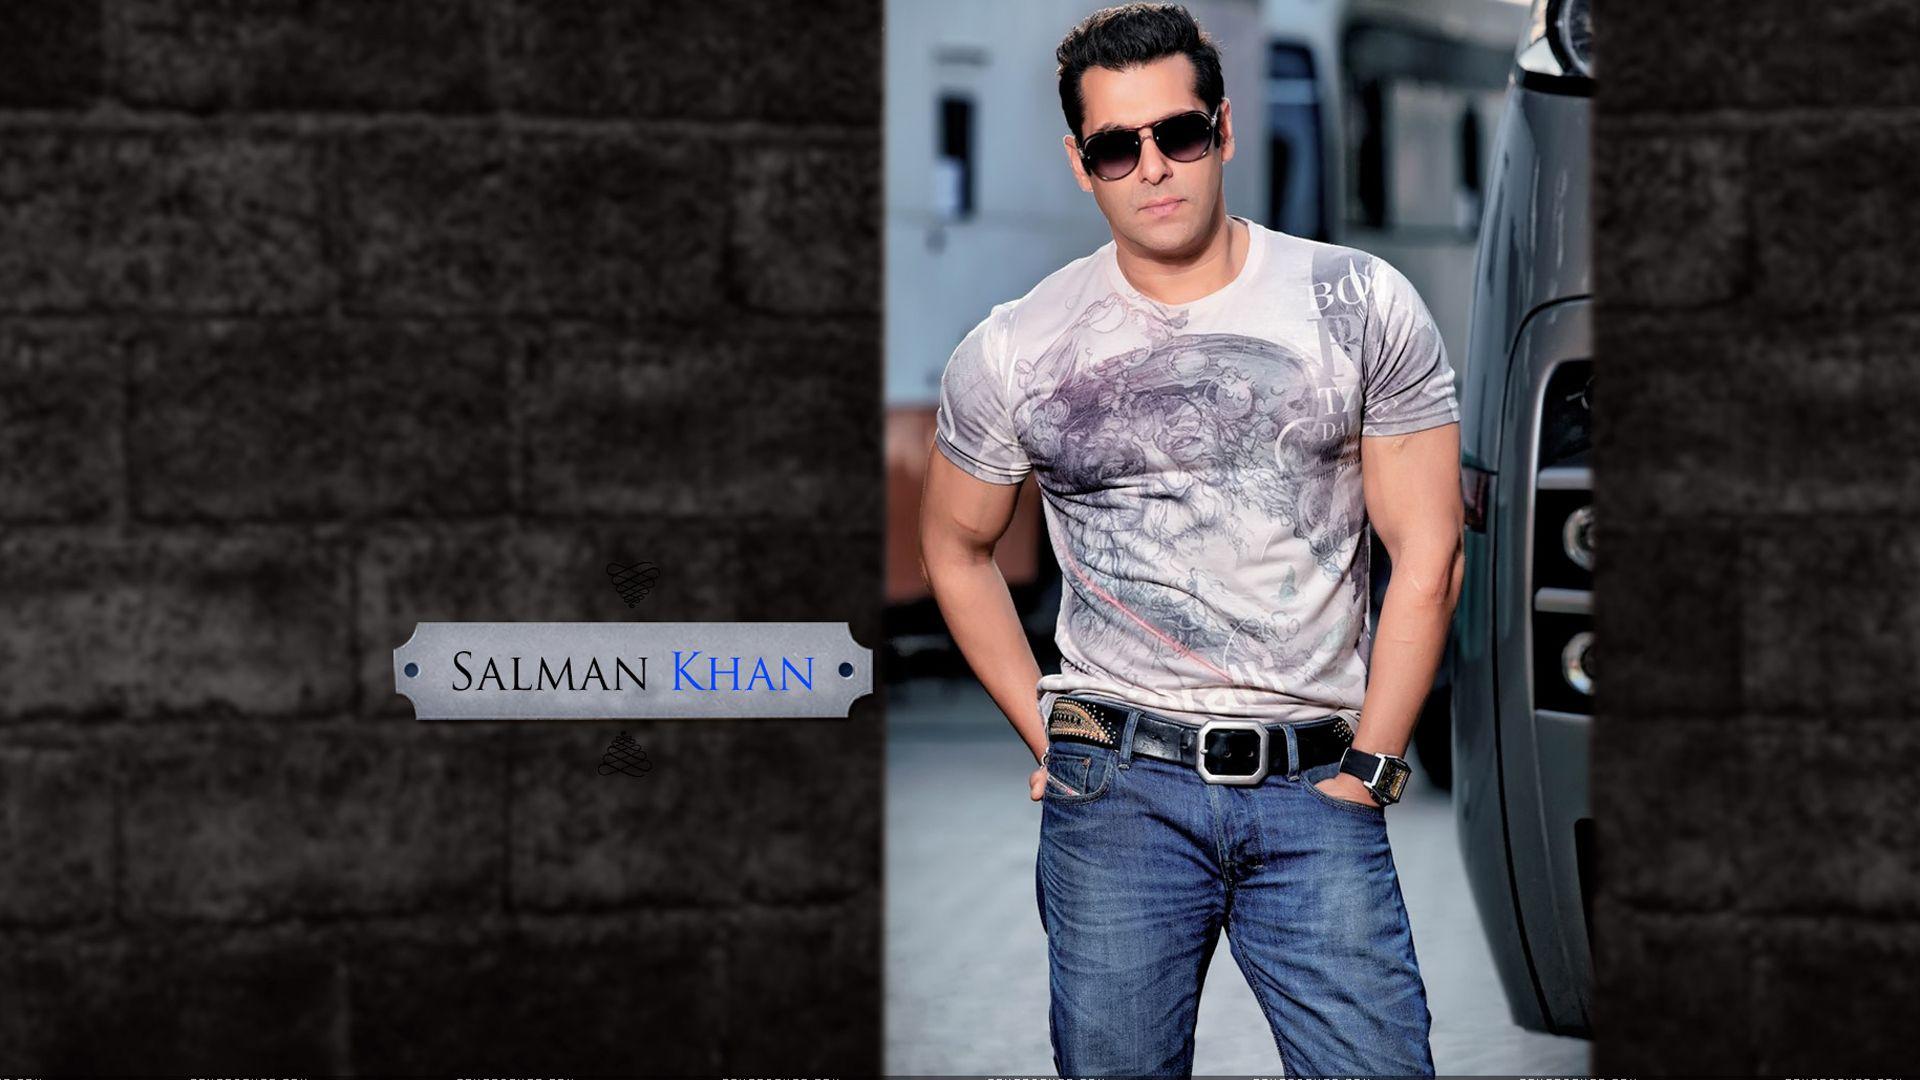 Salman Khan Wallpaper High Resolution and Quality Download